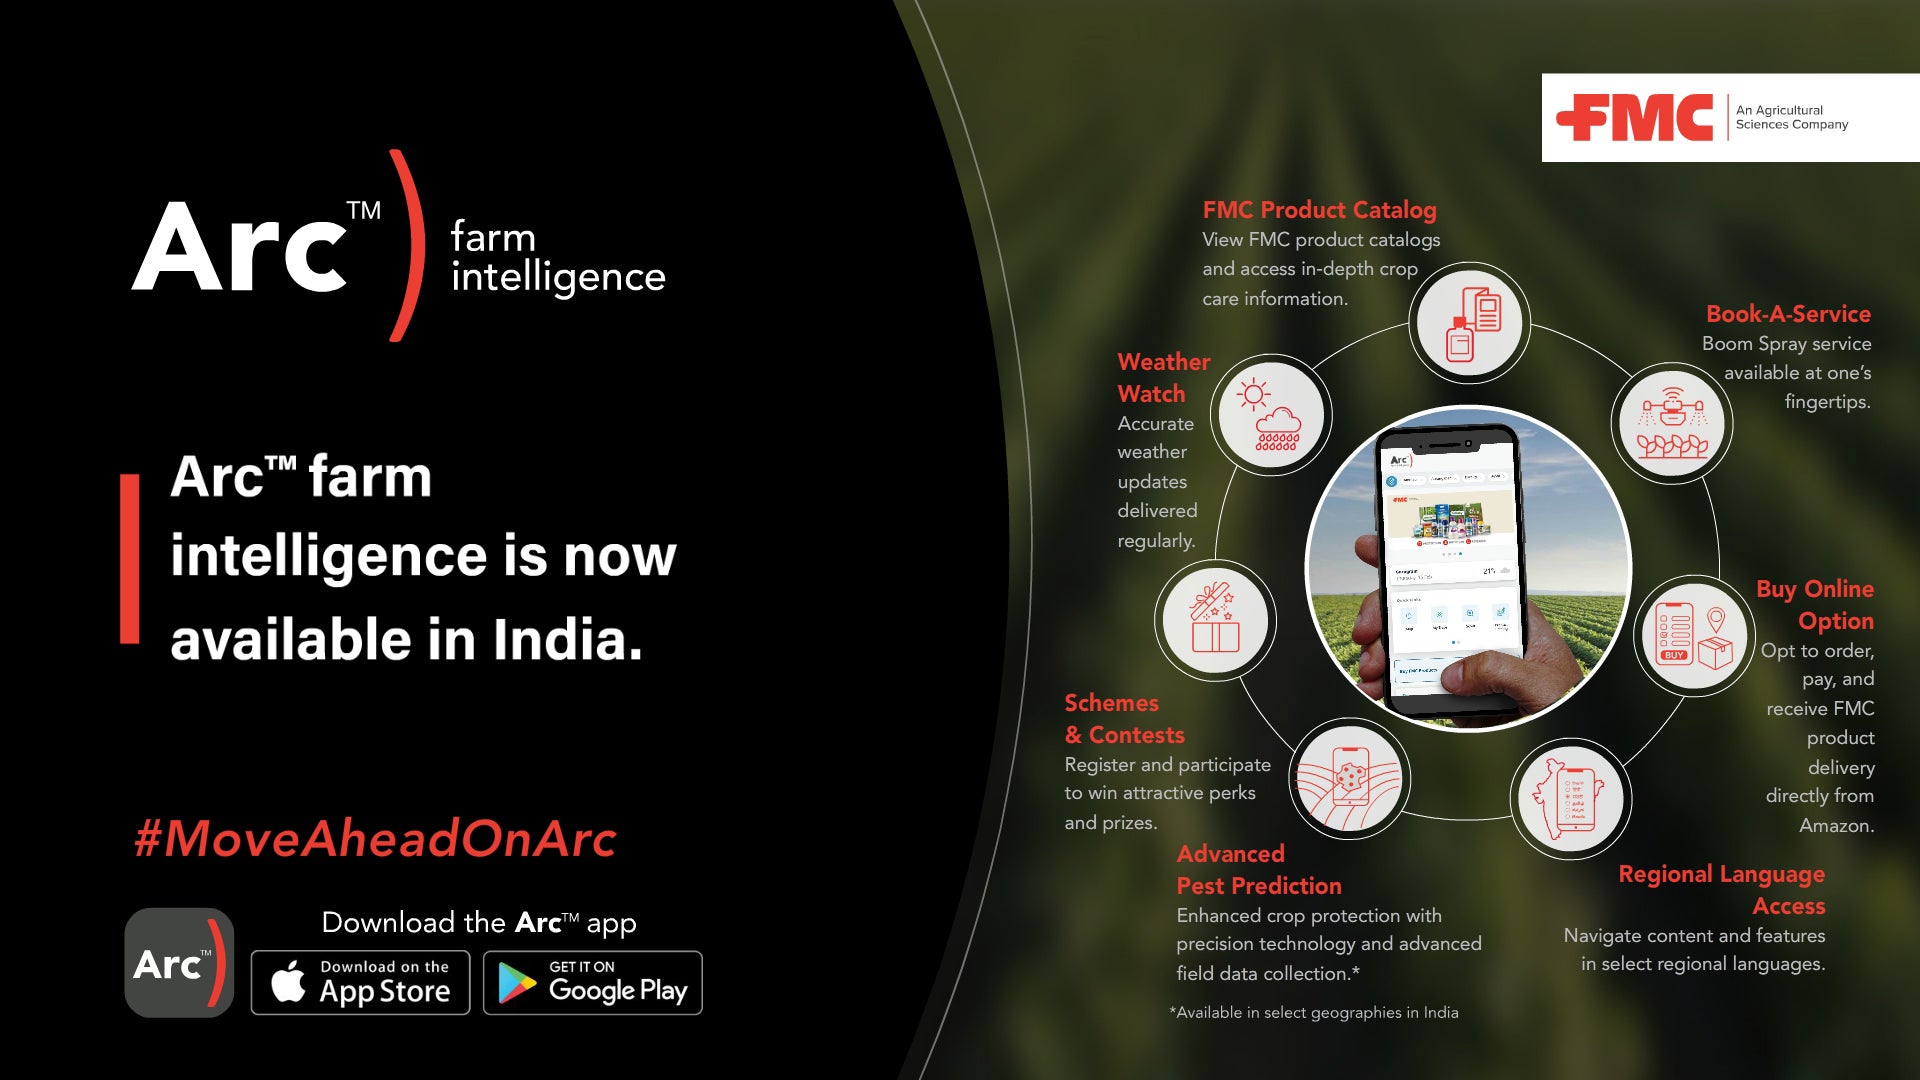 Arc™ farm intelligence in India